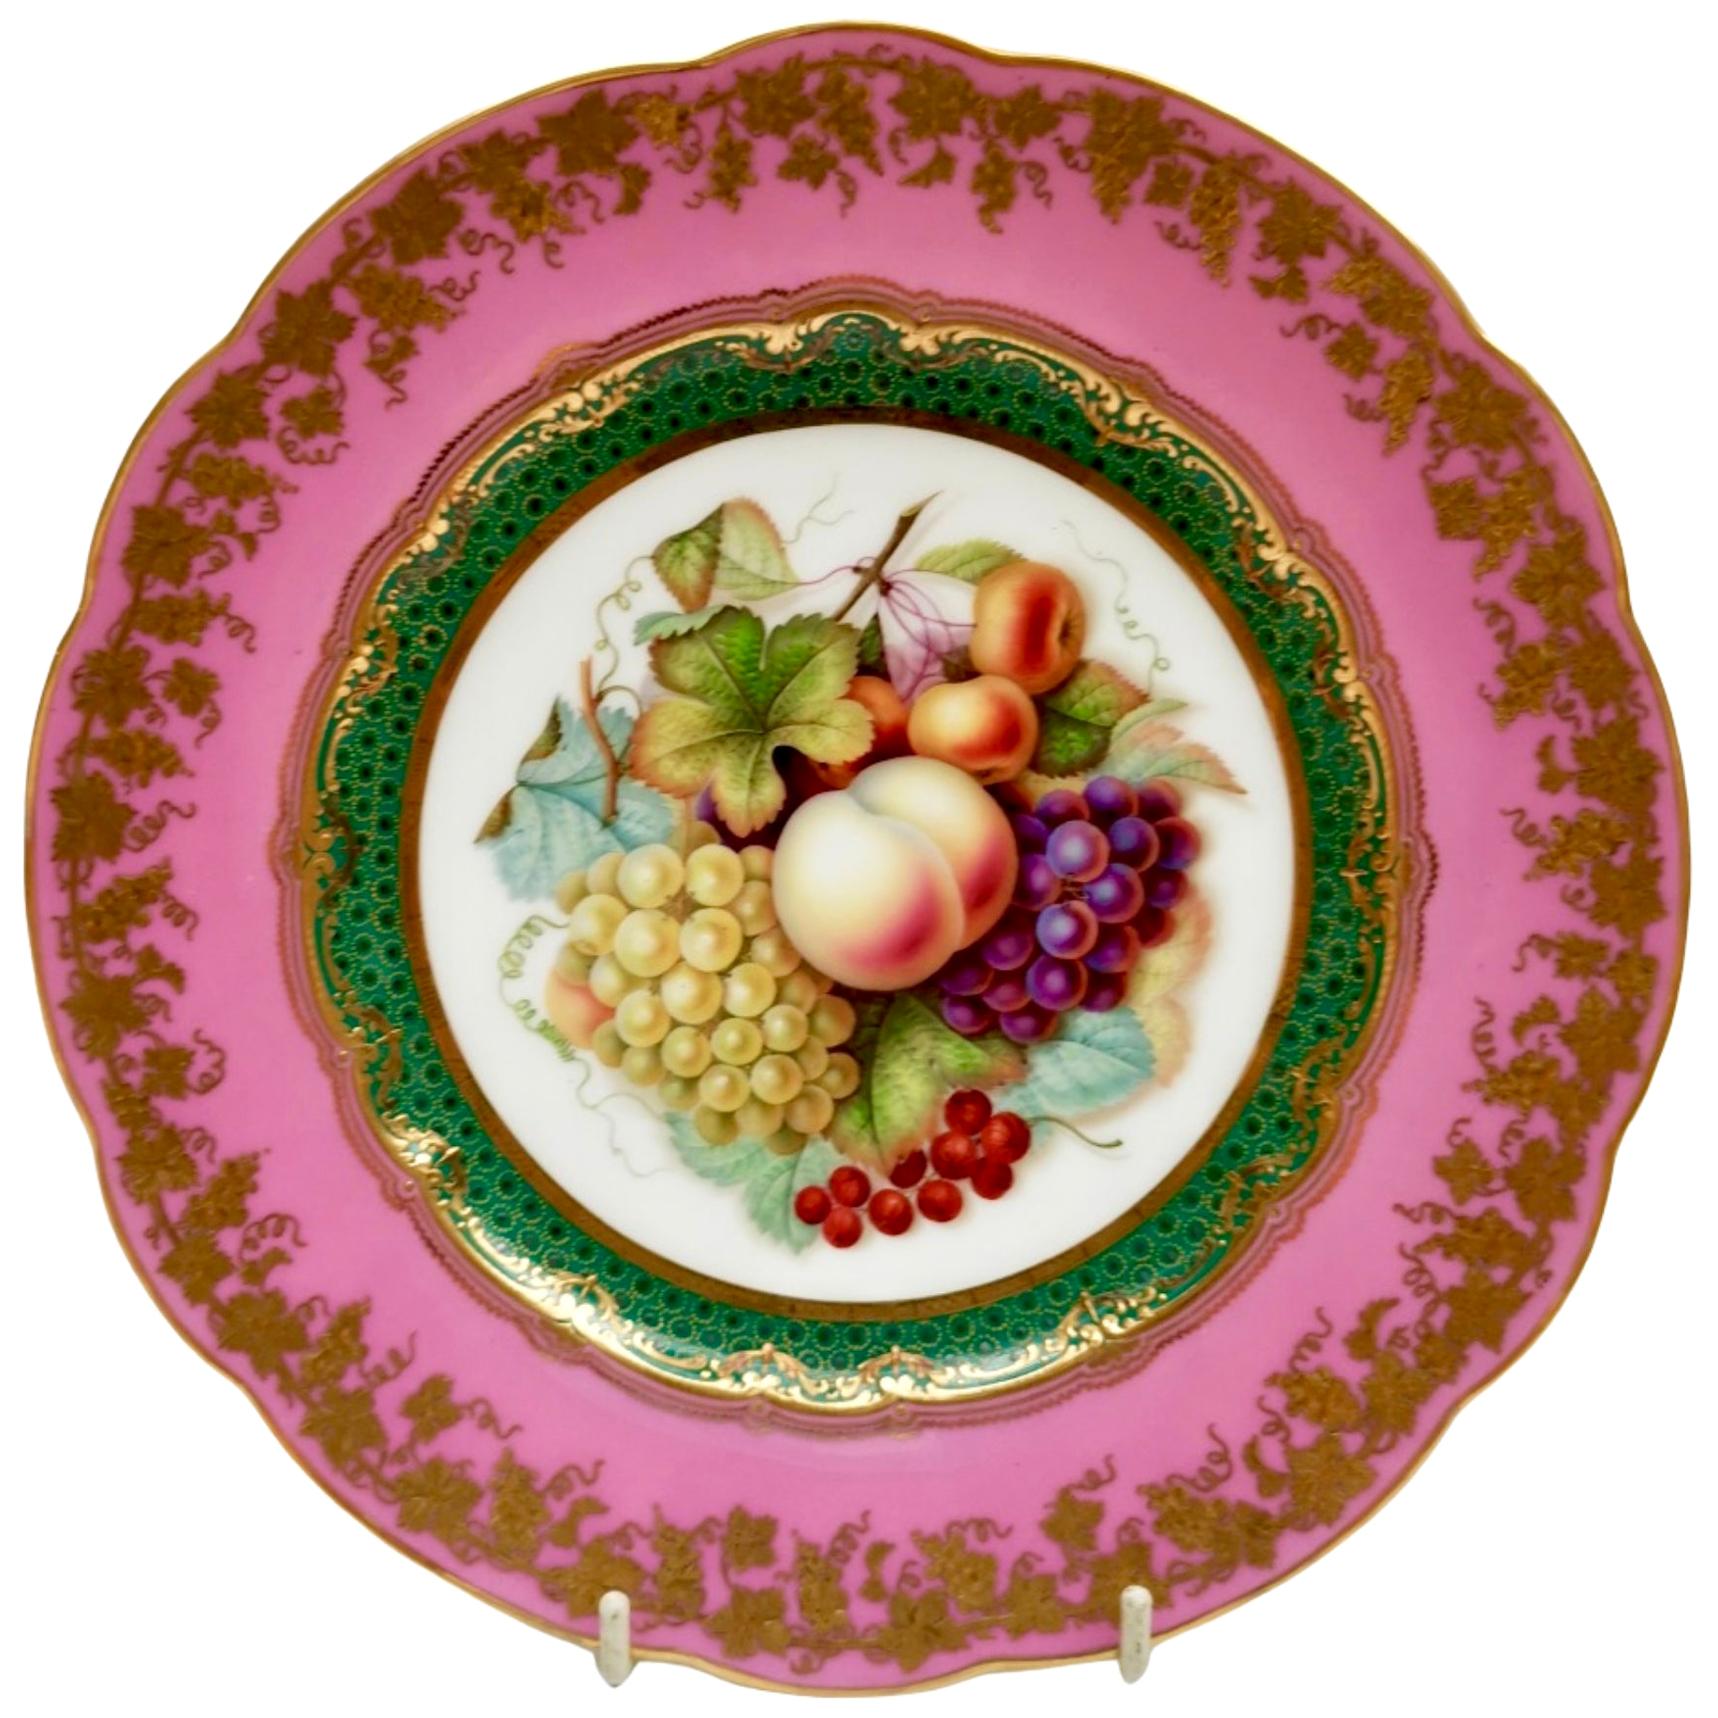 Coalport Porcelain Plate, Rose Du Barry Pink, Fruits by Jabey Aston, circa 1870